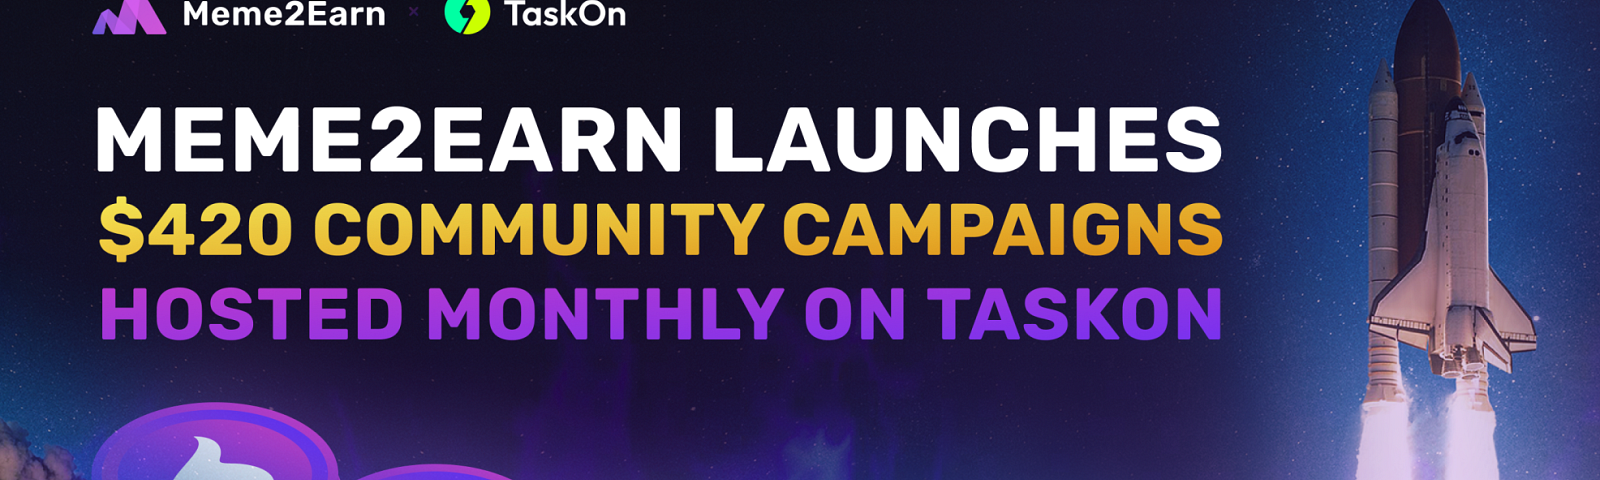 meme2earn $420 taskon community campaigns